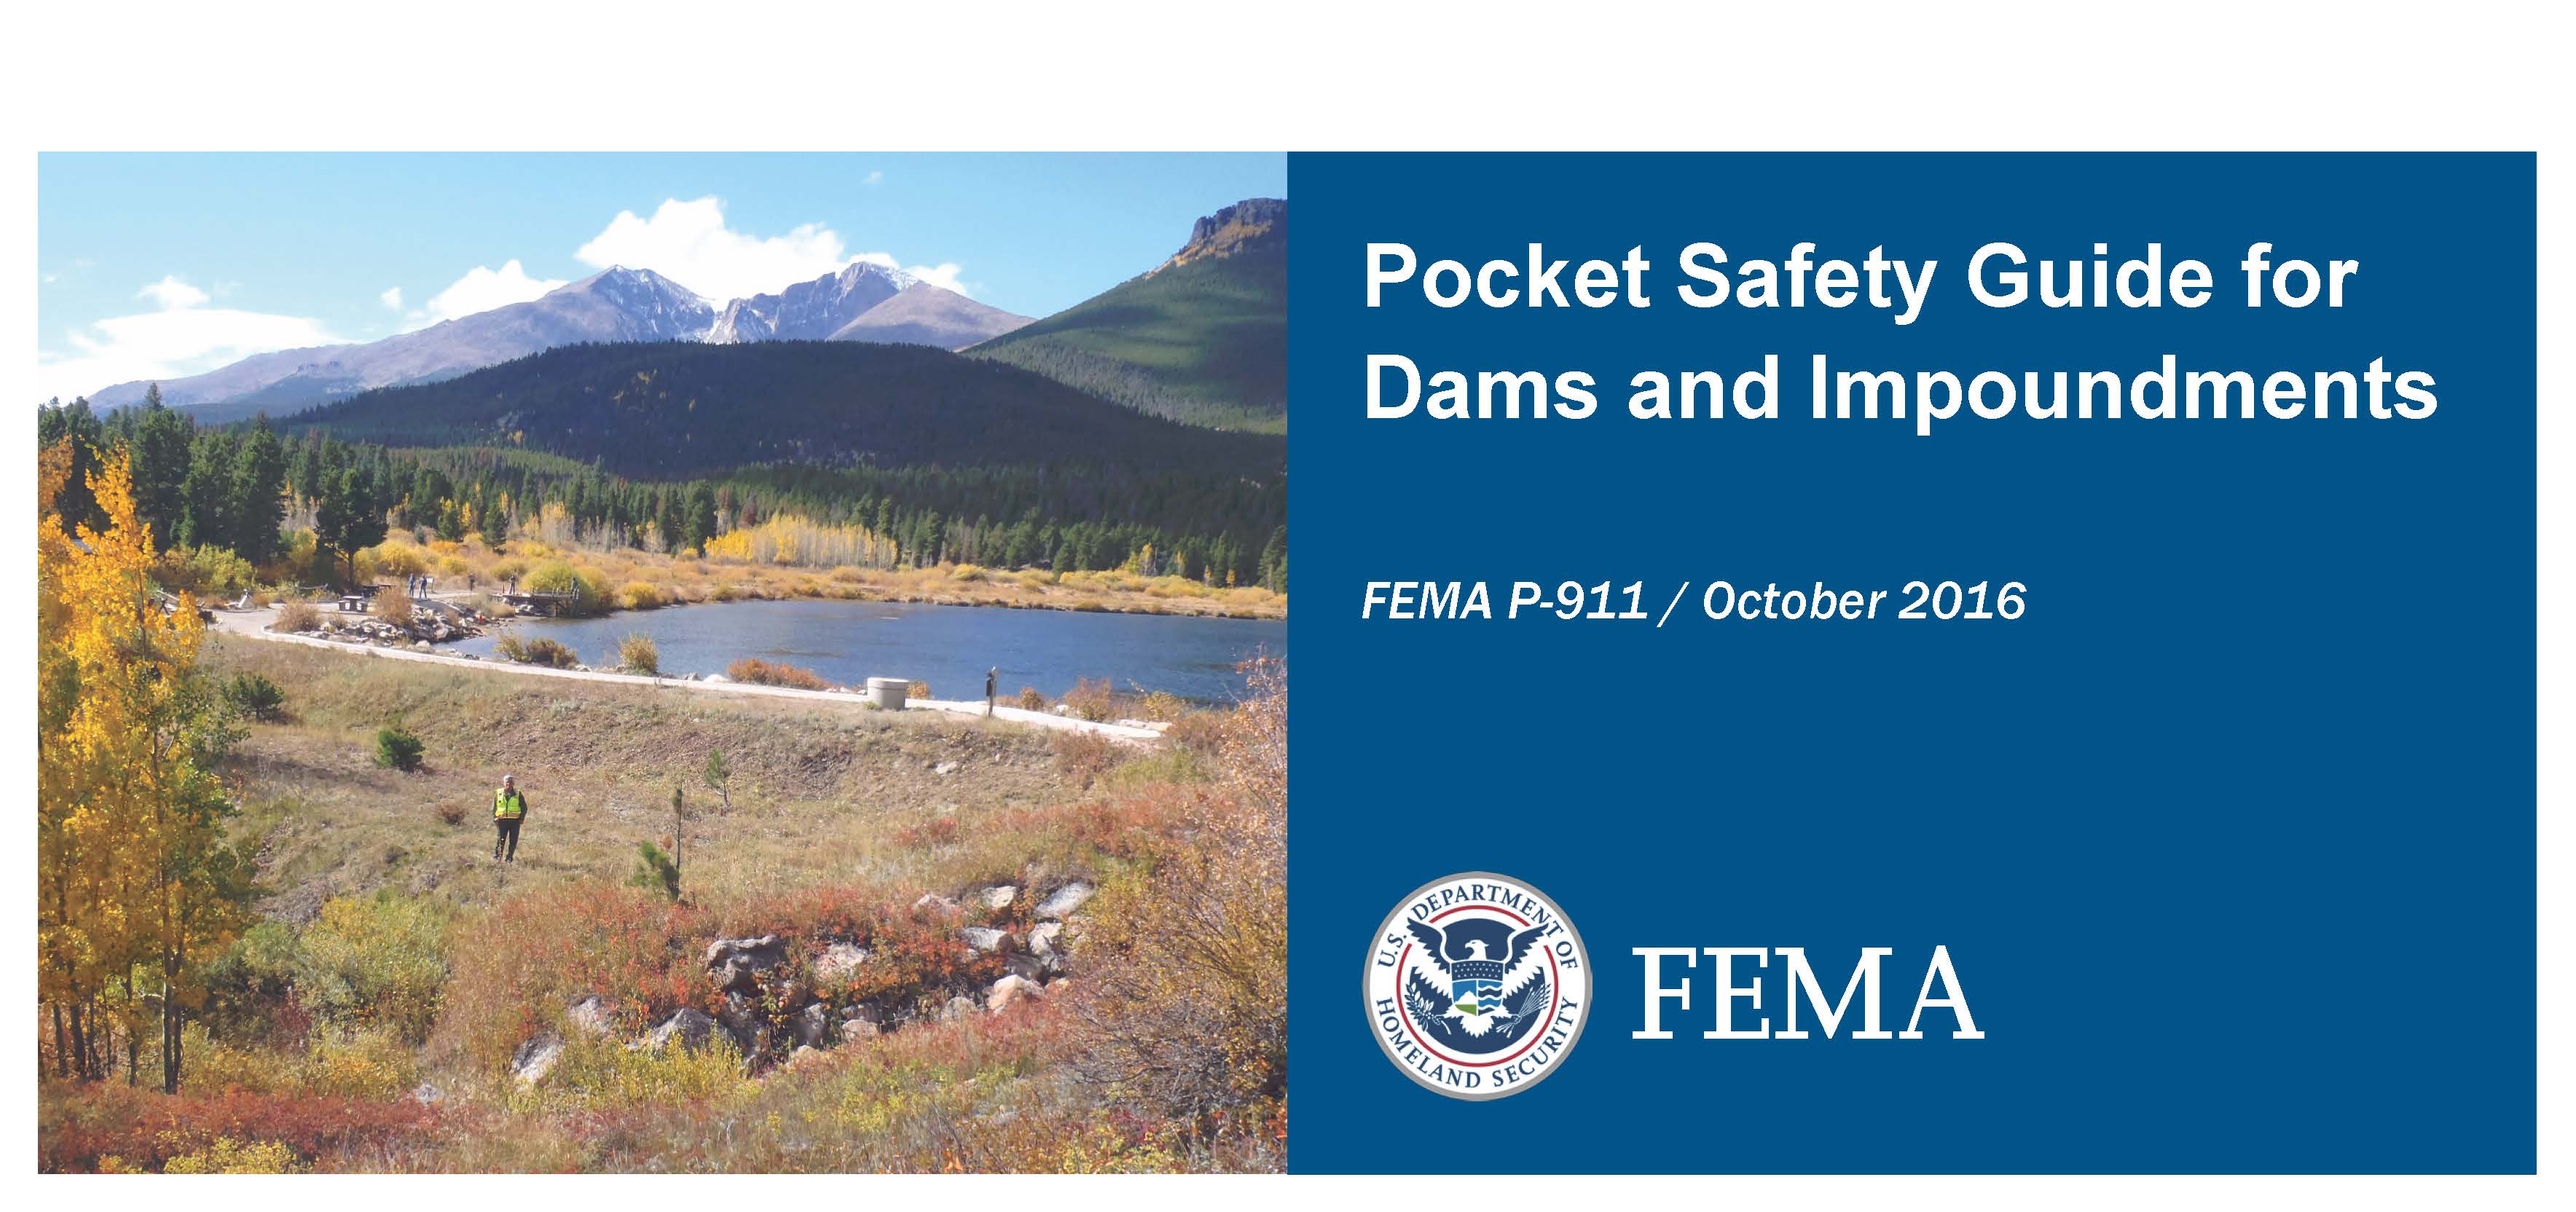 FEMAP-911-Pocket Safety Guide.jpg